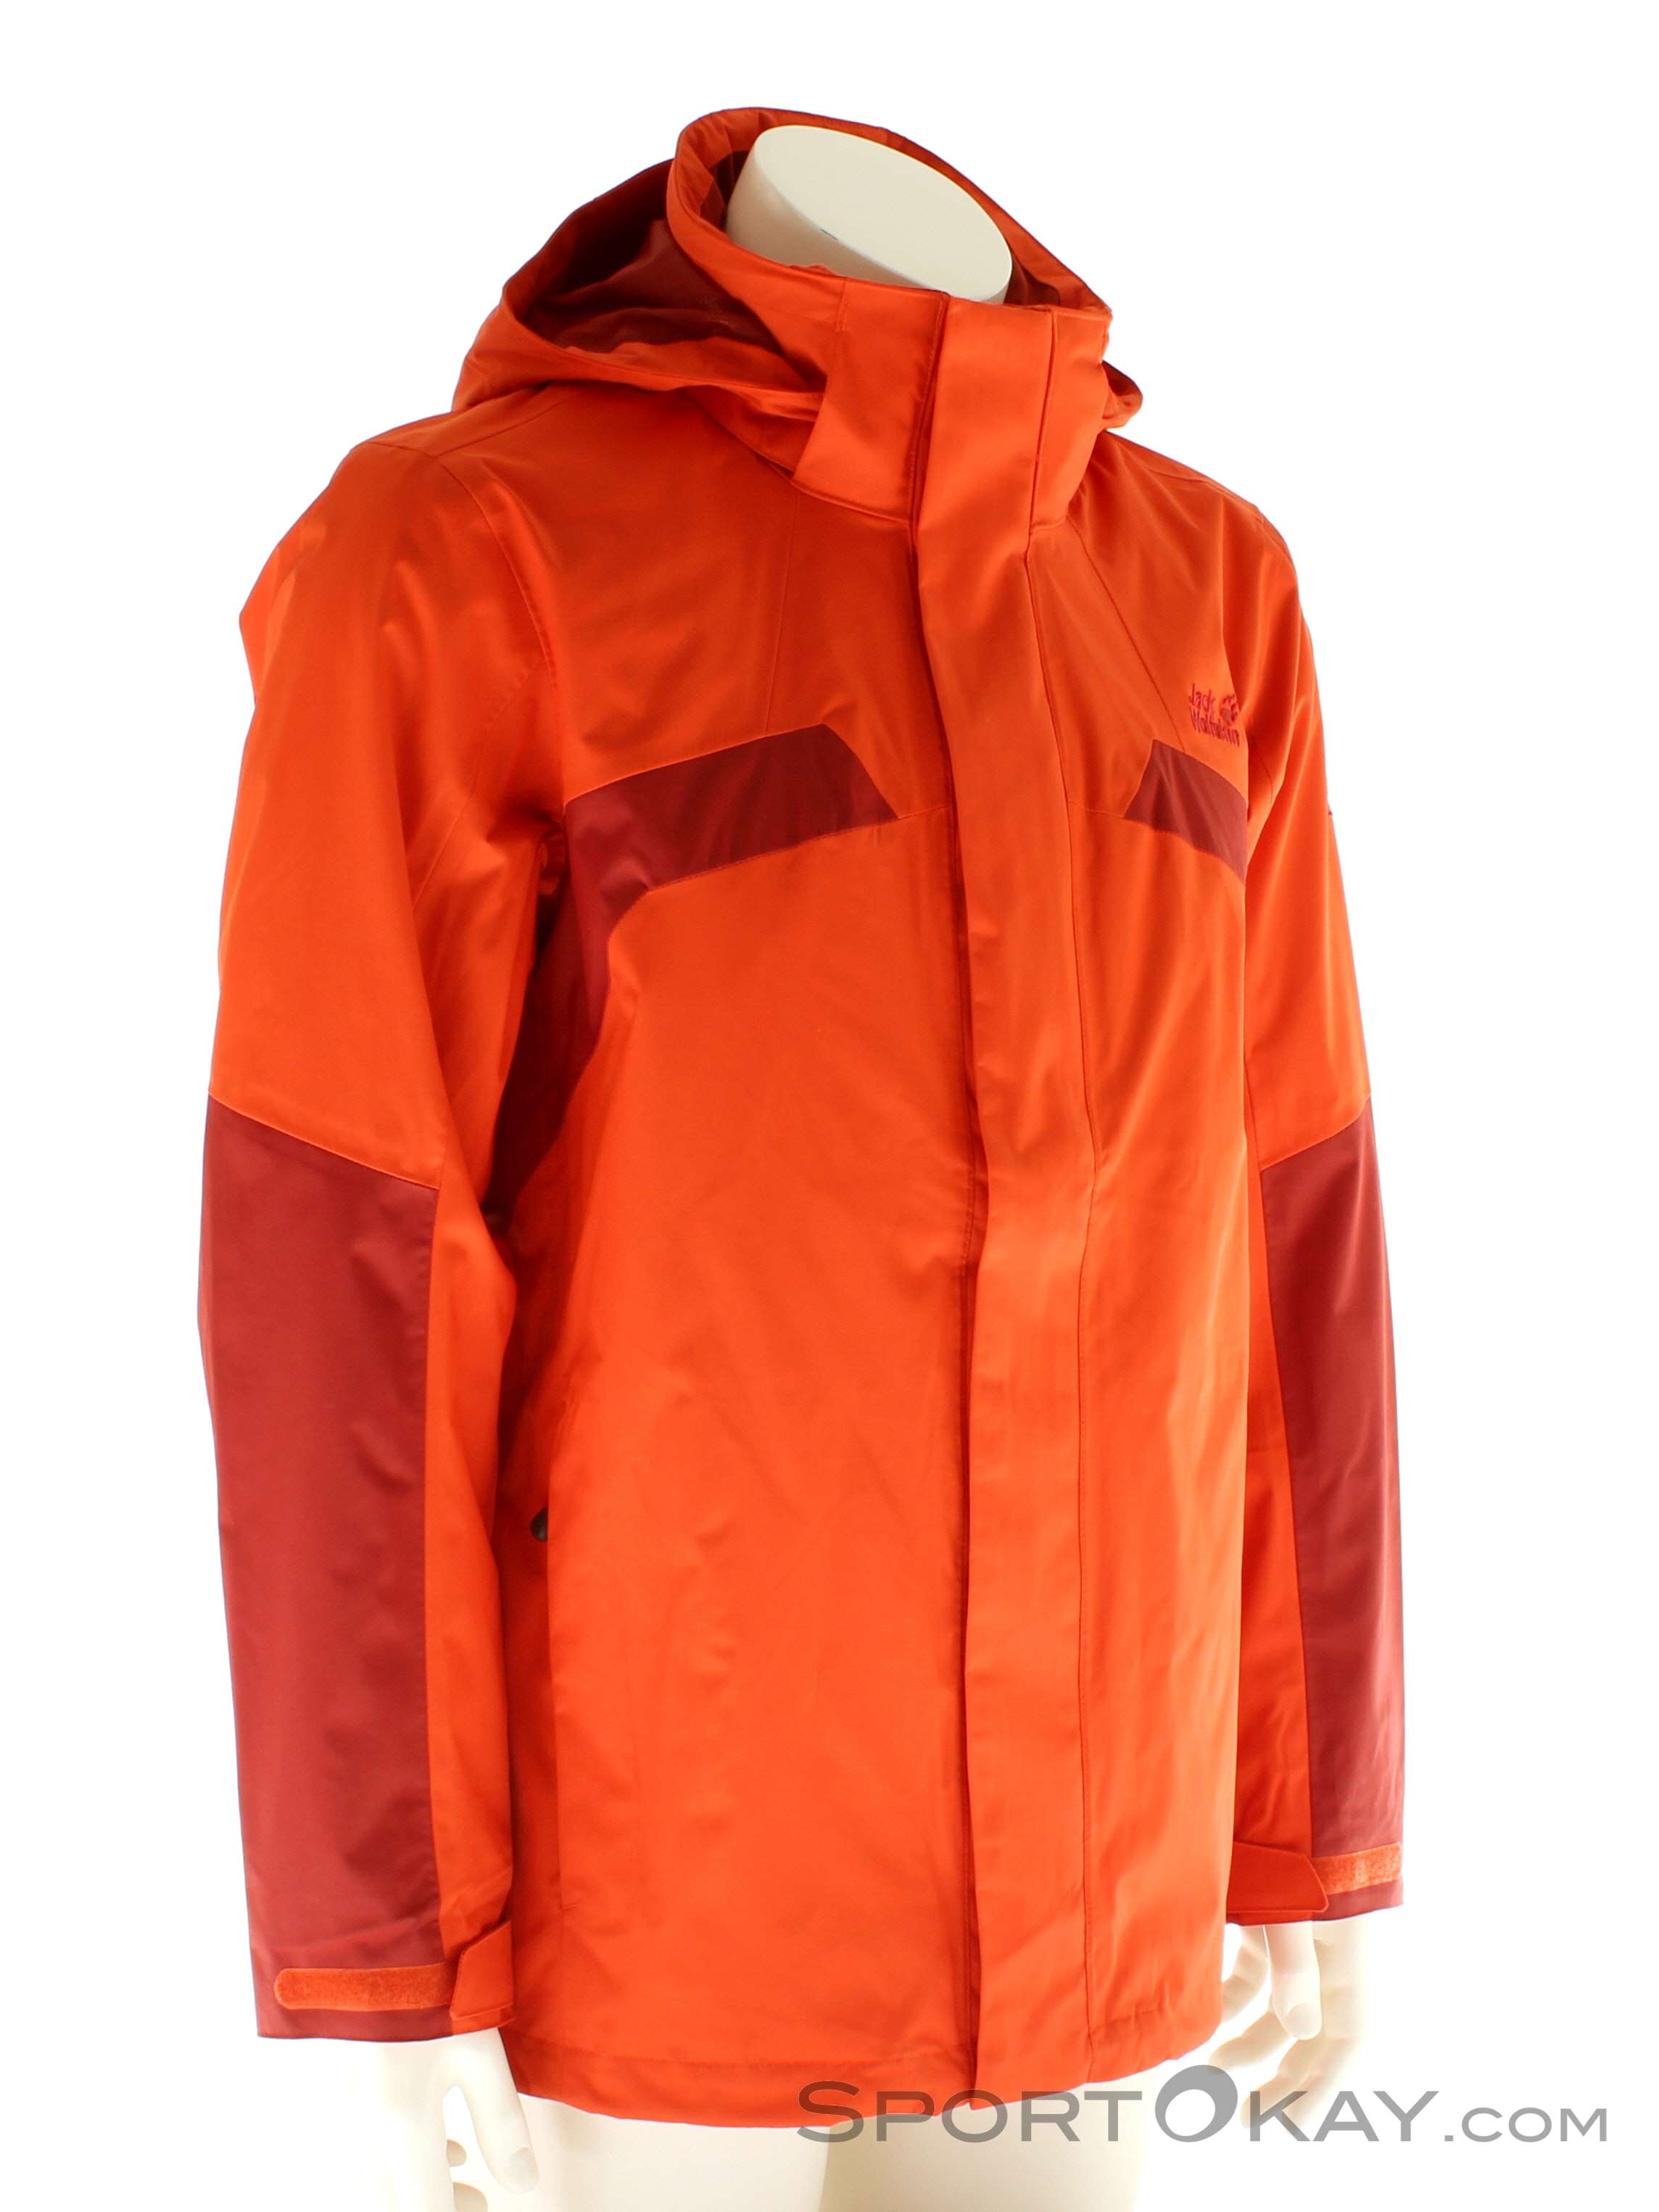 Jack Topaz II Mens Outdoor Jacket - Jackets - Outdoor Clothing - Outdoor - All